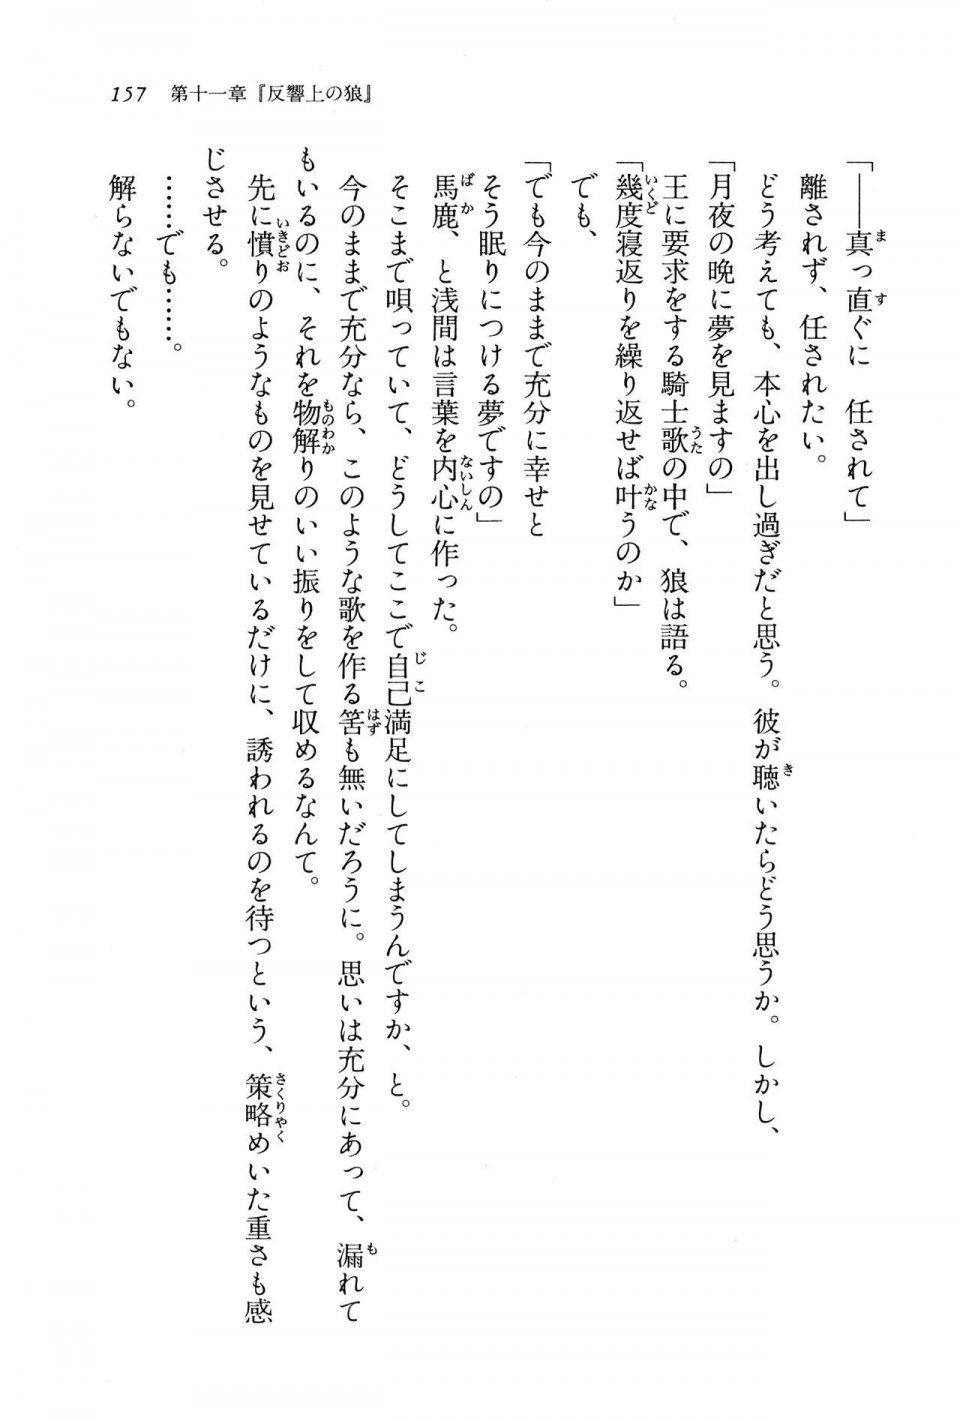 Kyoukai Senjou no Horizon BD Special Mininovel Vol 8(4B) - Photo #161